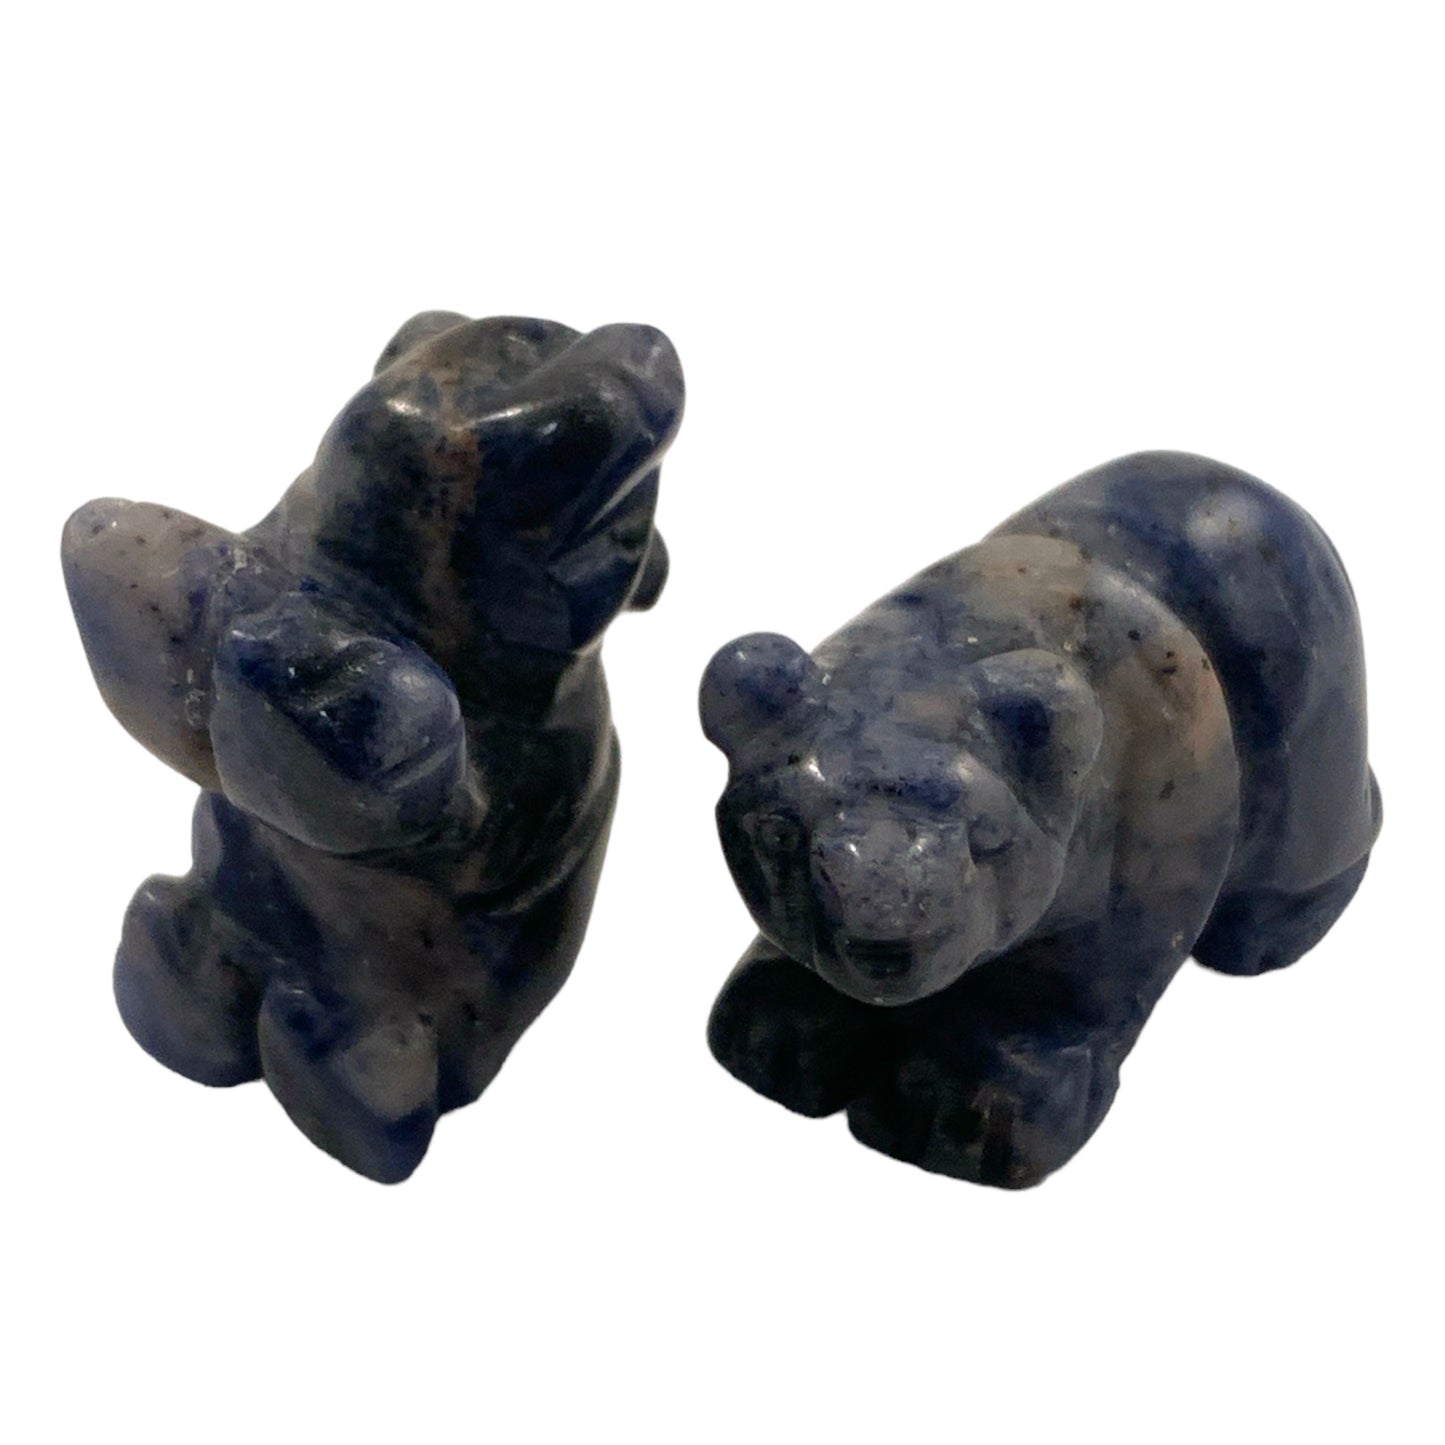 Walking Bear - Sodalite- Mini 1 inch - 1 Piece - China - NEW1022